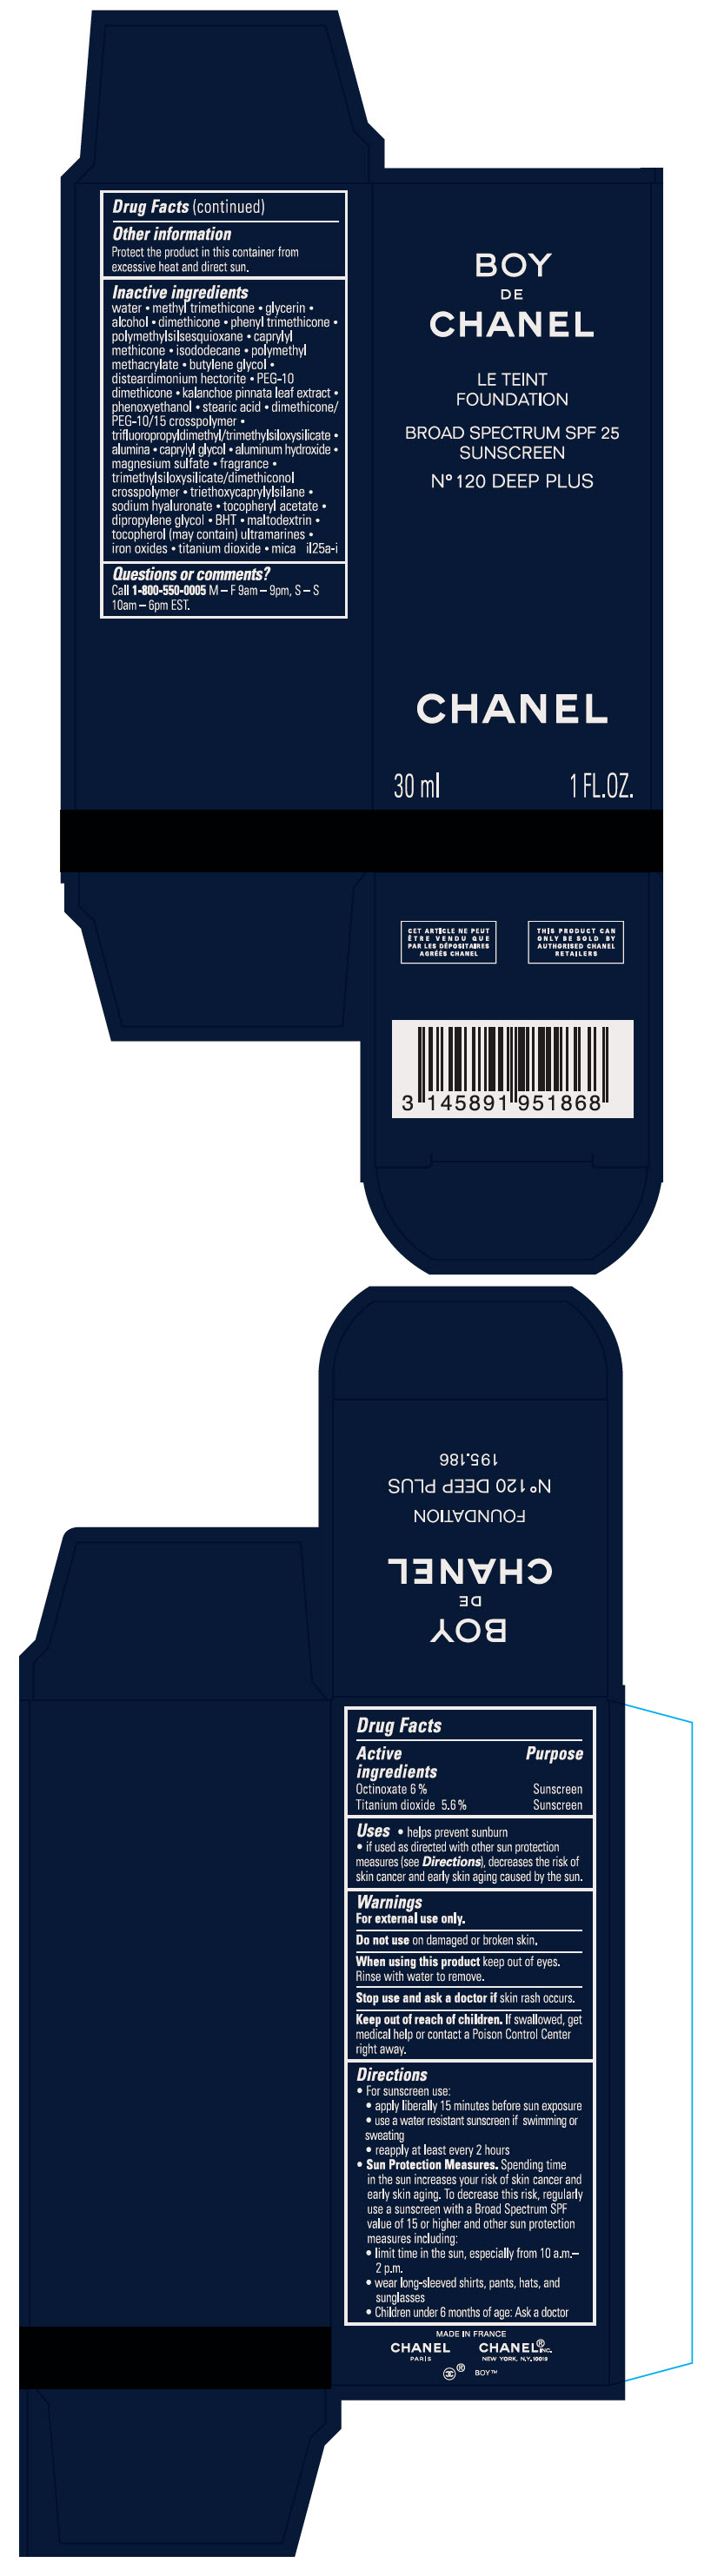 PRINCIPAL DISPLAY PANEL - 30 ml Bottle Carton - N°120 Deep Plus